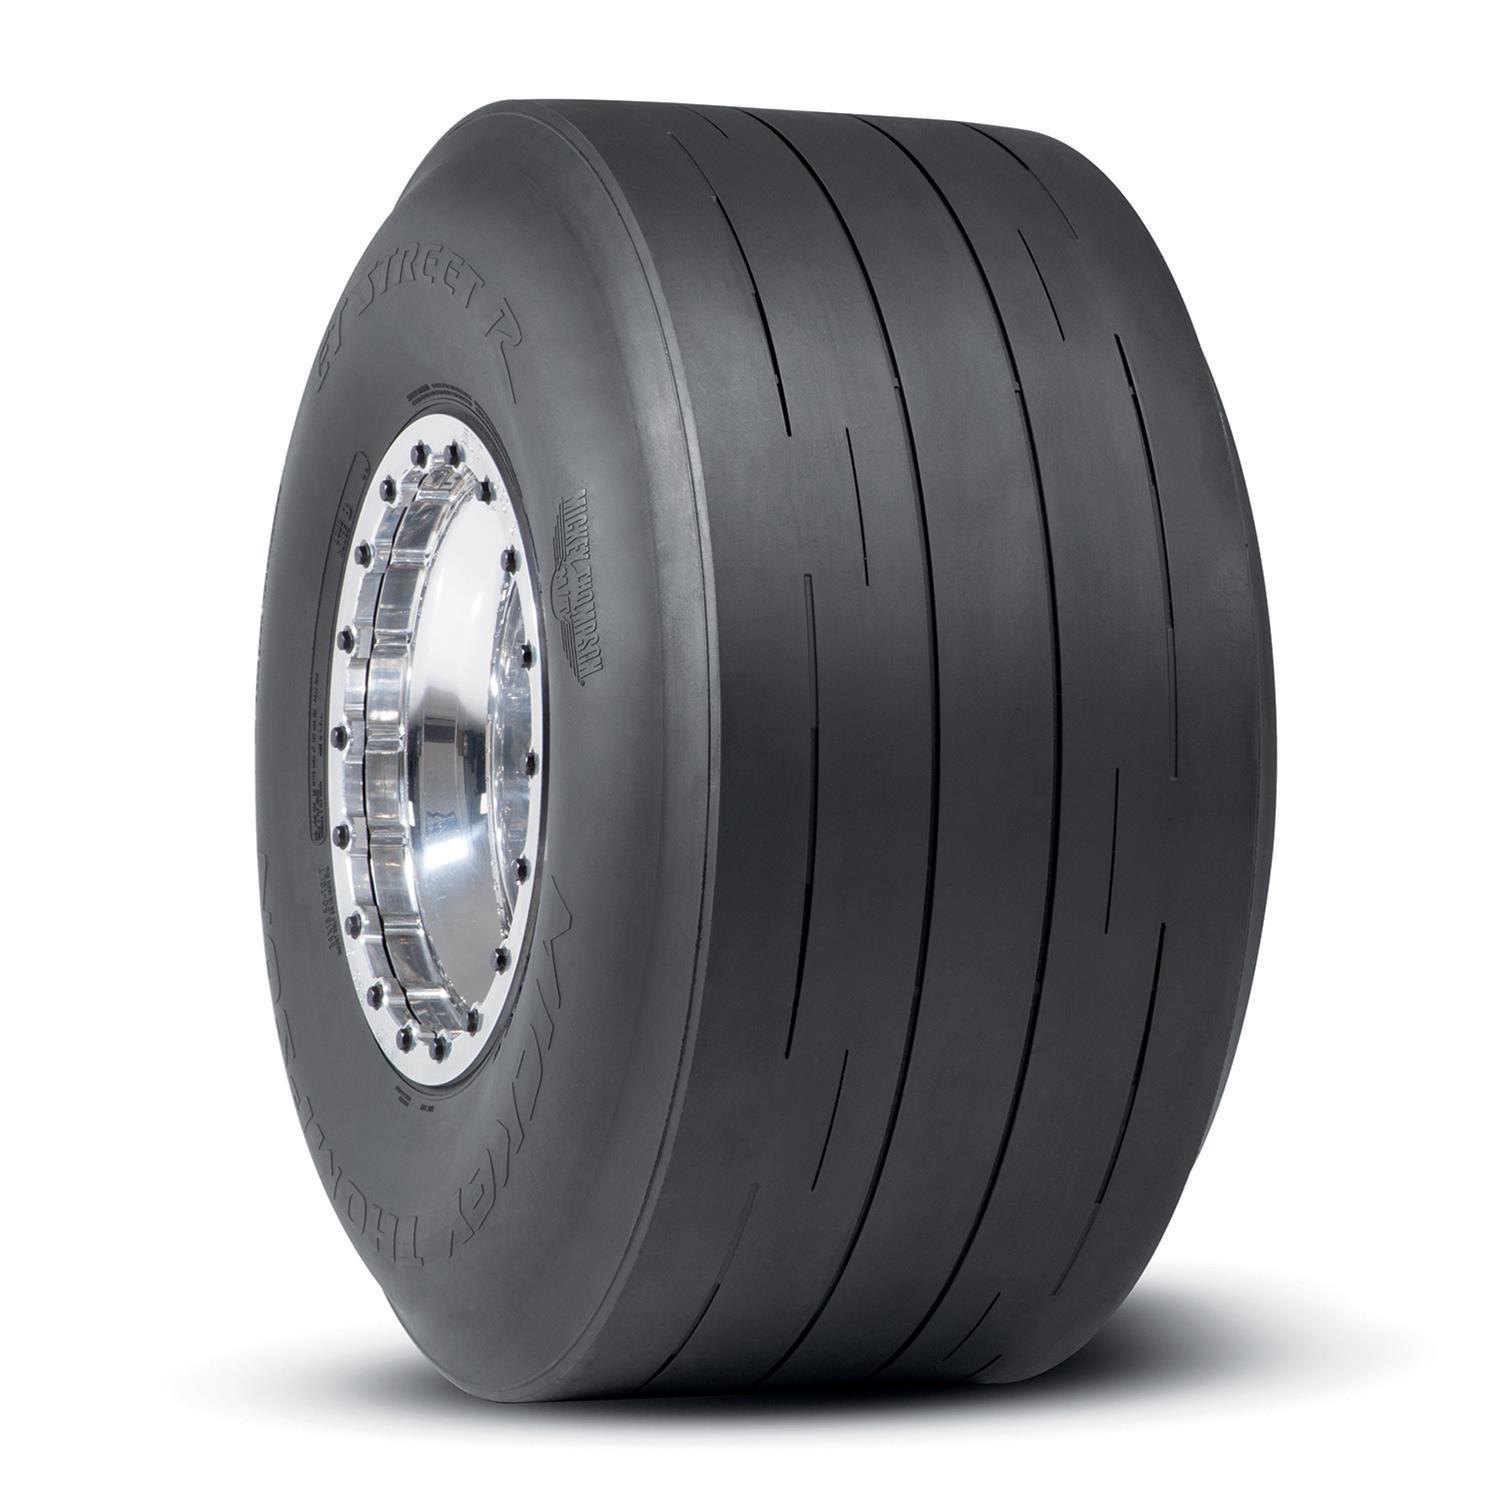 28x11.50-17LT ET Street R Tire - Burlile Performance Products